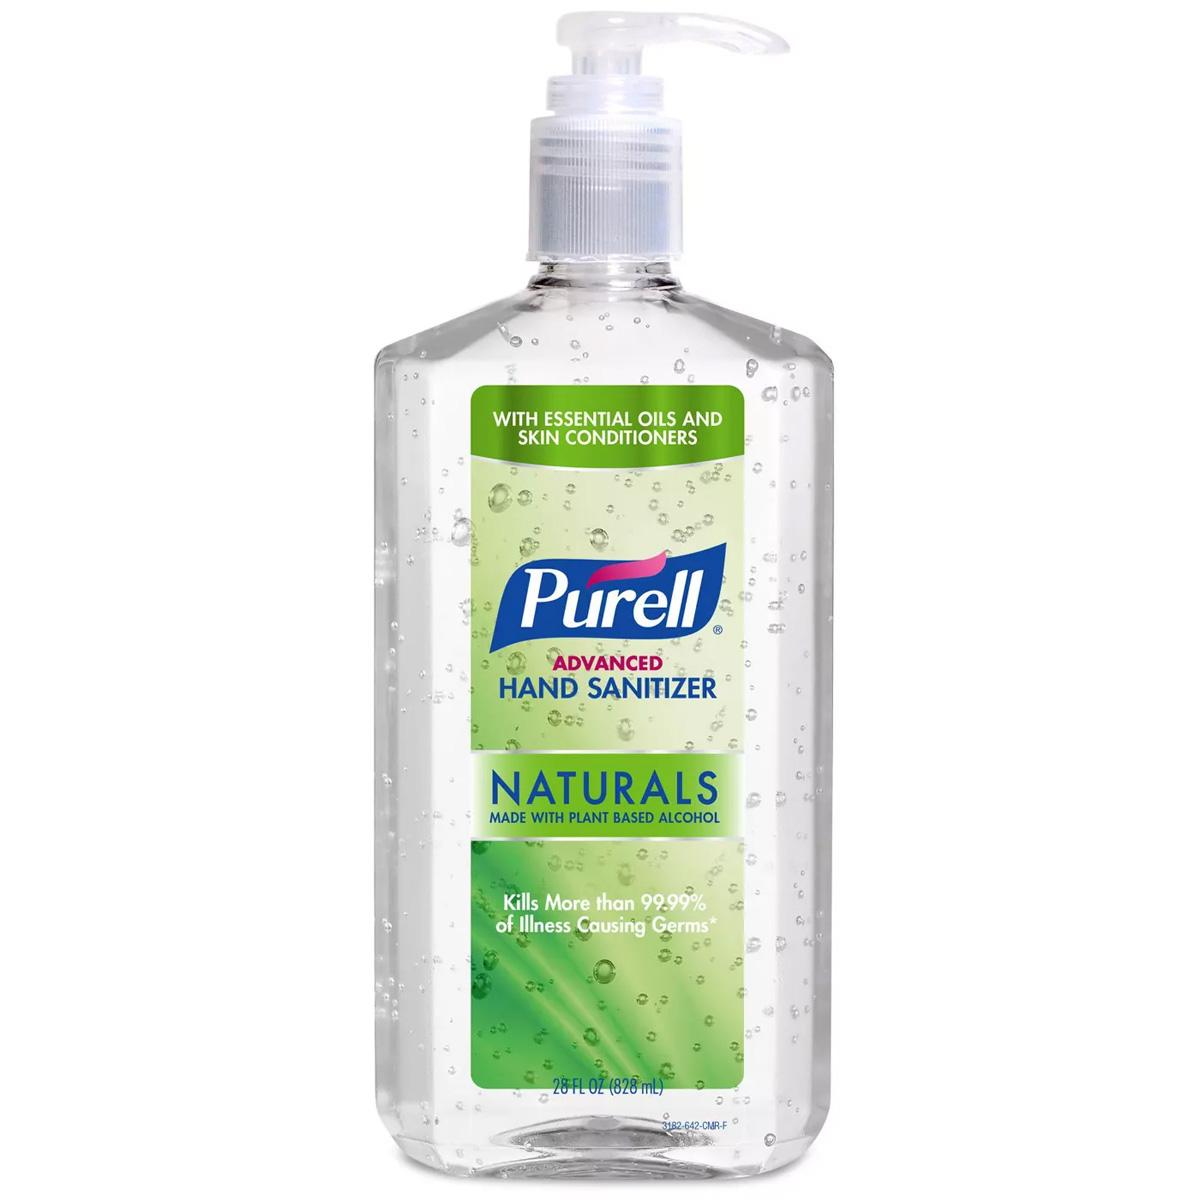 28oz Purell Advanced Hand Sanitizer Naturals for $5.19